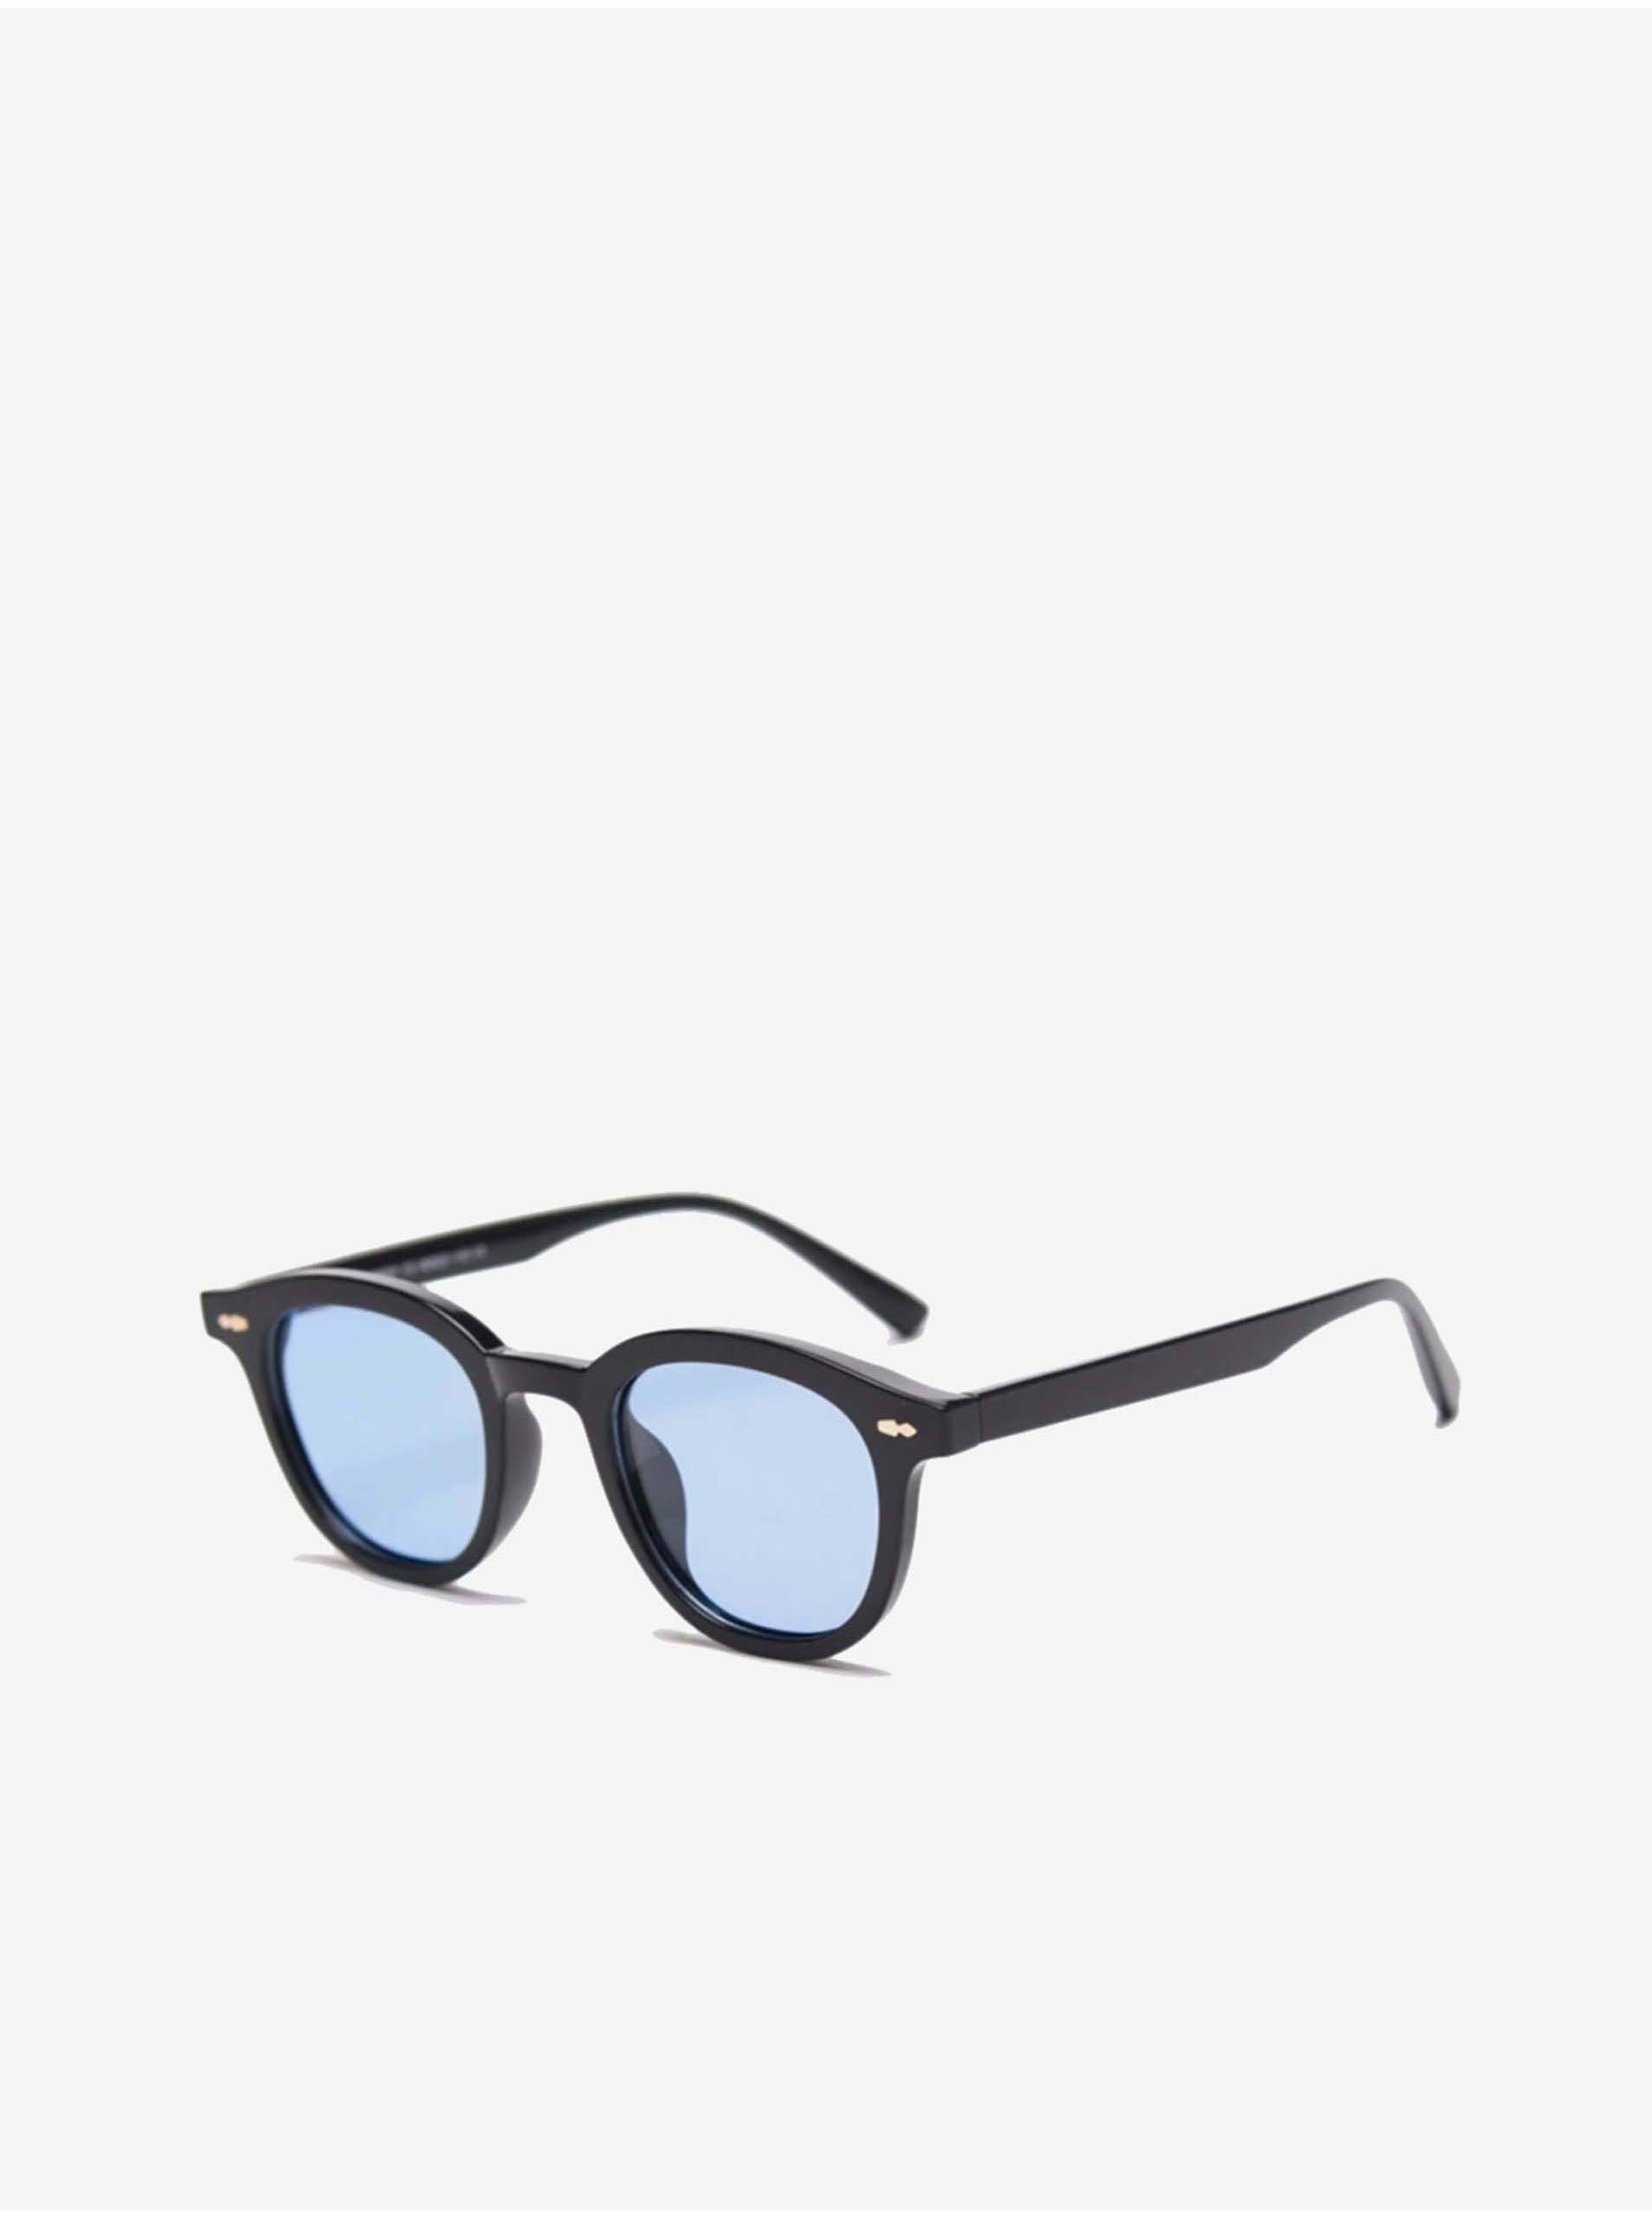 Lacno VeyRey Slnečné okuliare oválne Doris modré sklá